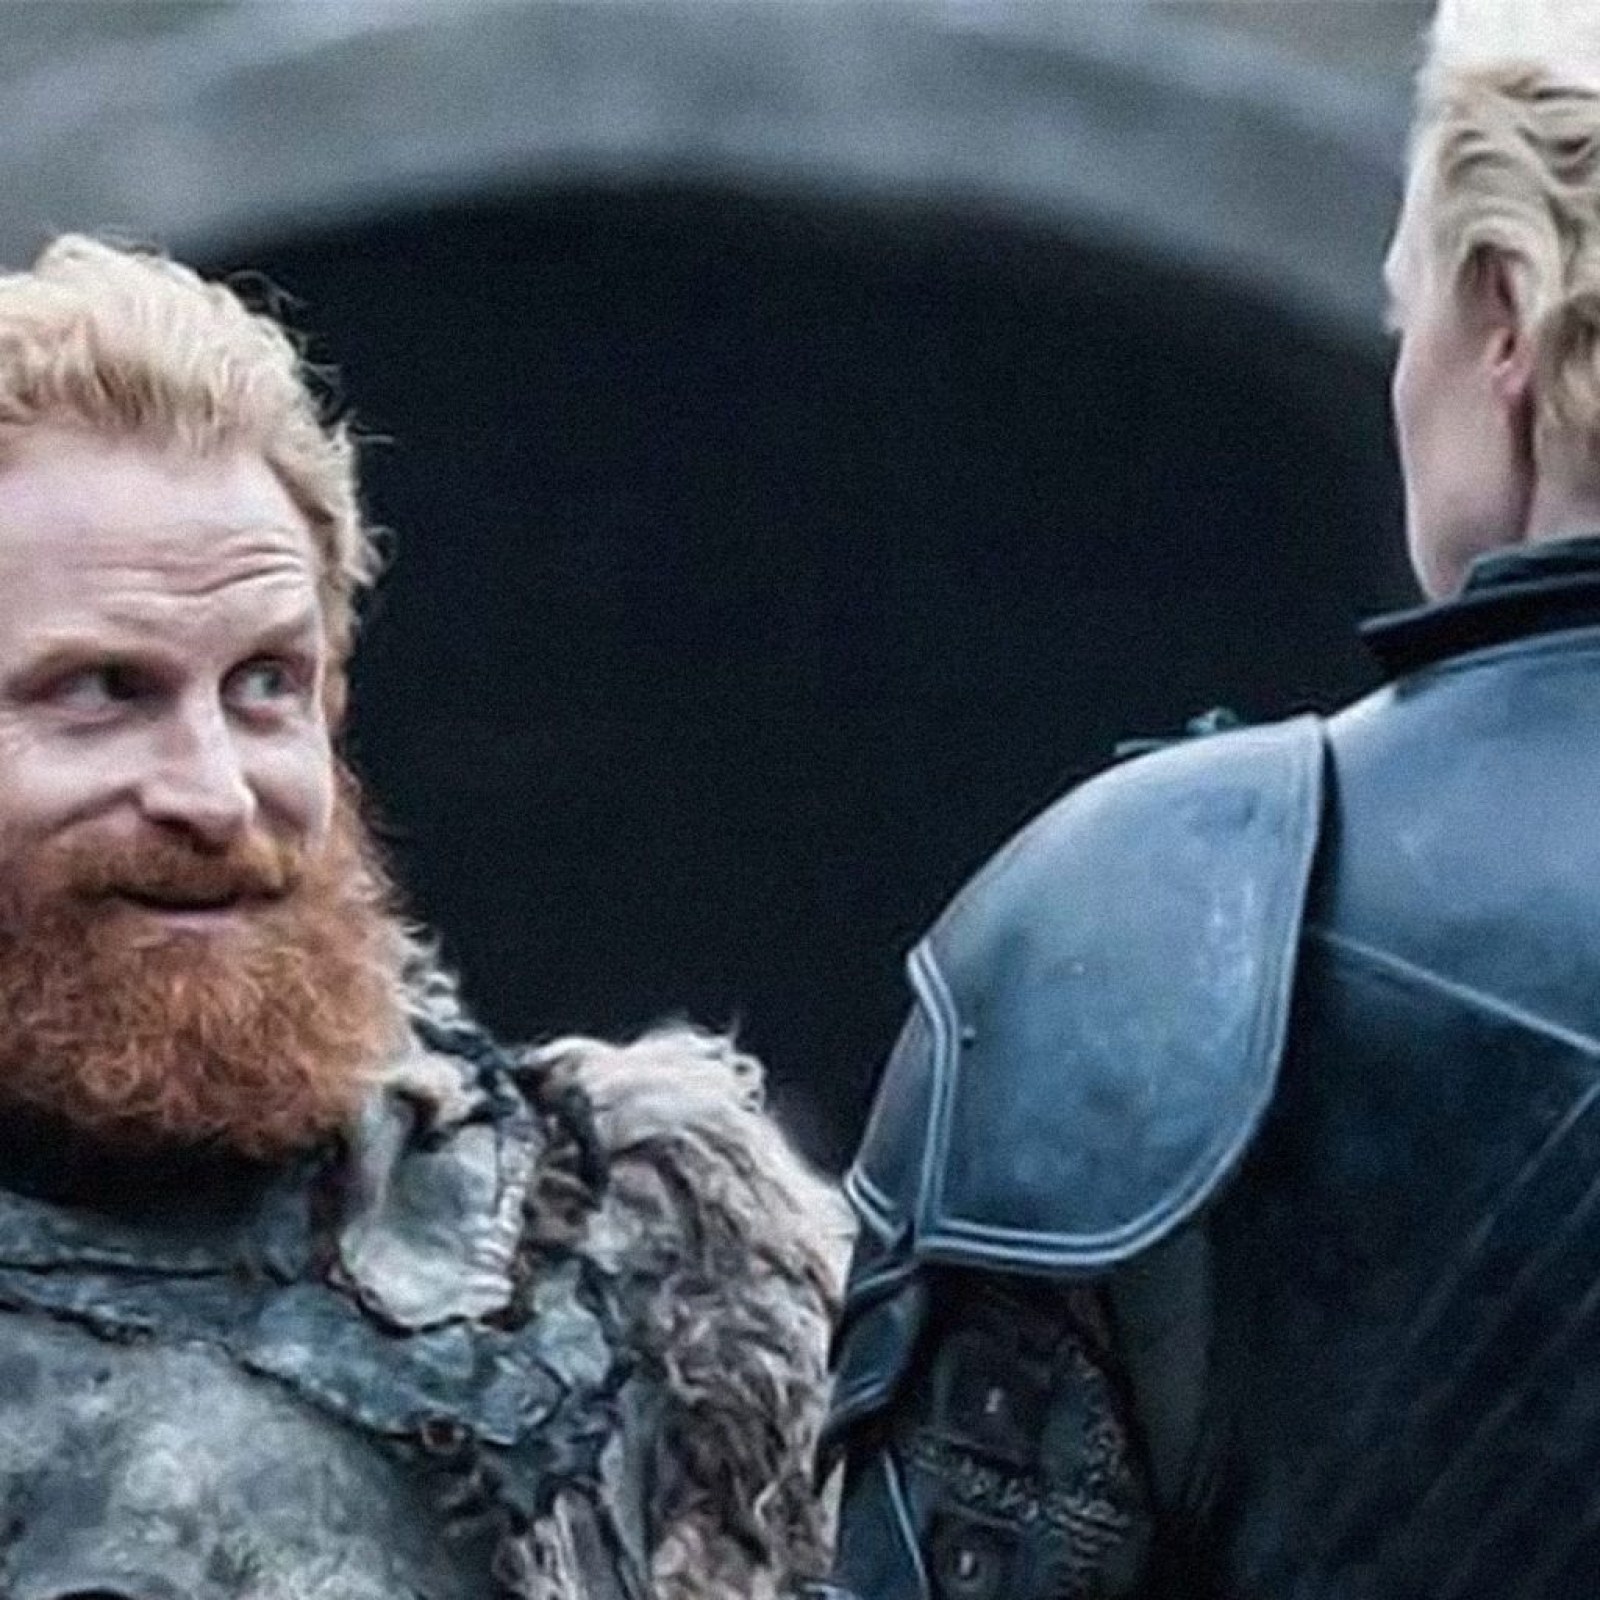 Game Of Thrones Season 8 S Brienne Of Tarth Actor Drops Tormund Giantsbane Hint